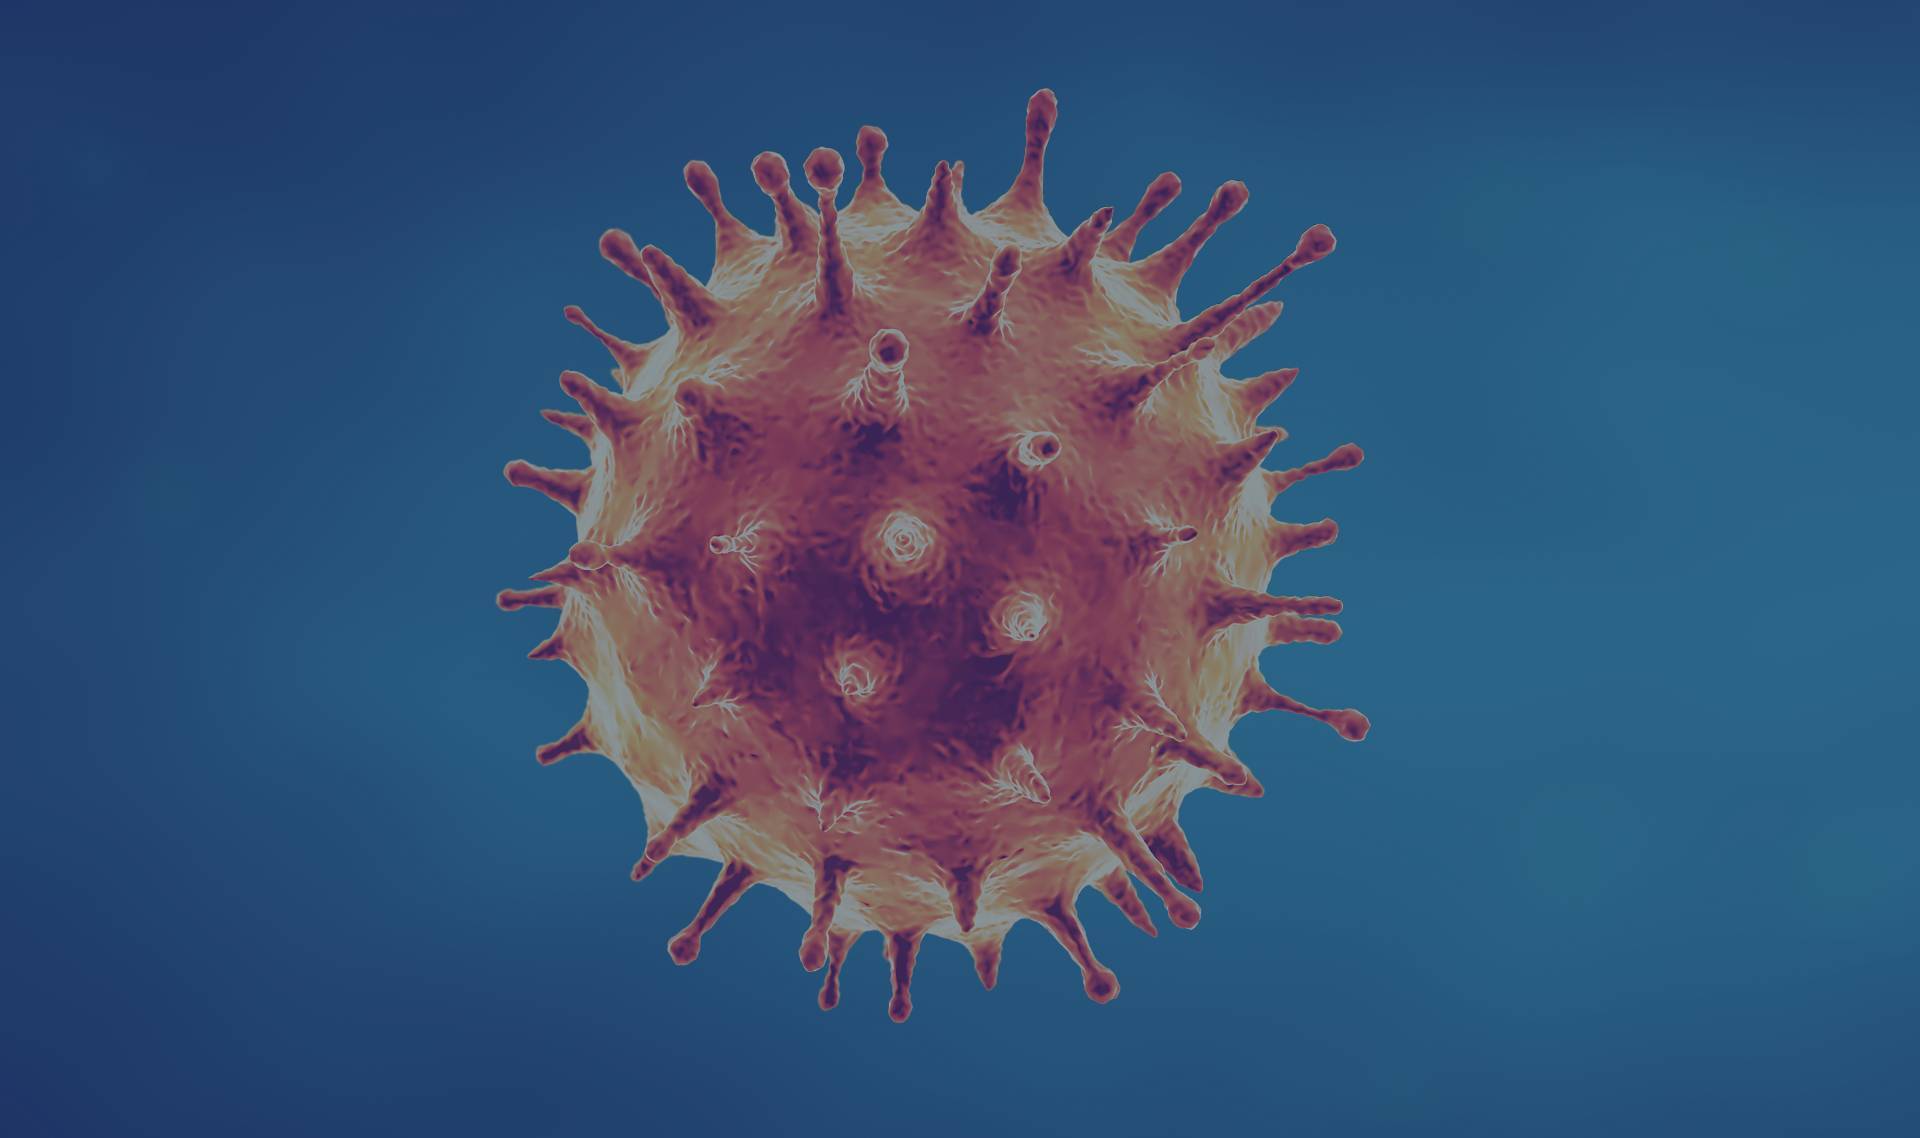 Covid-19 Virus